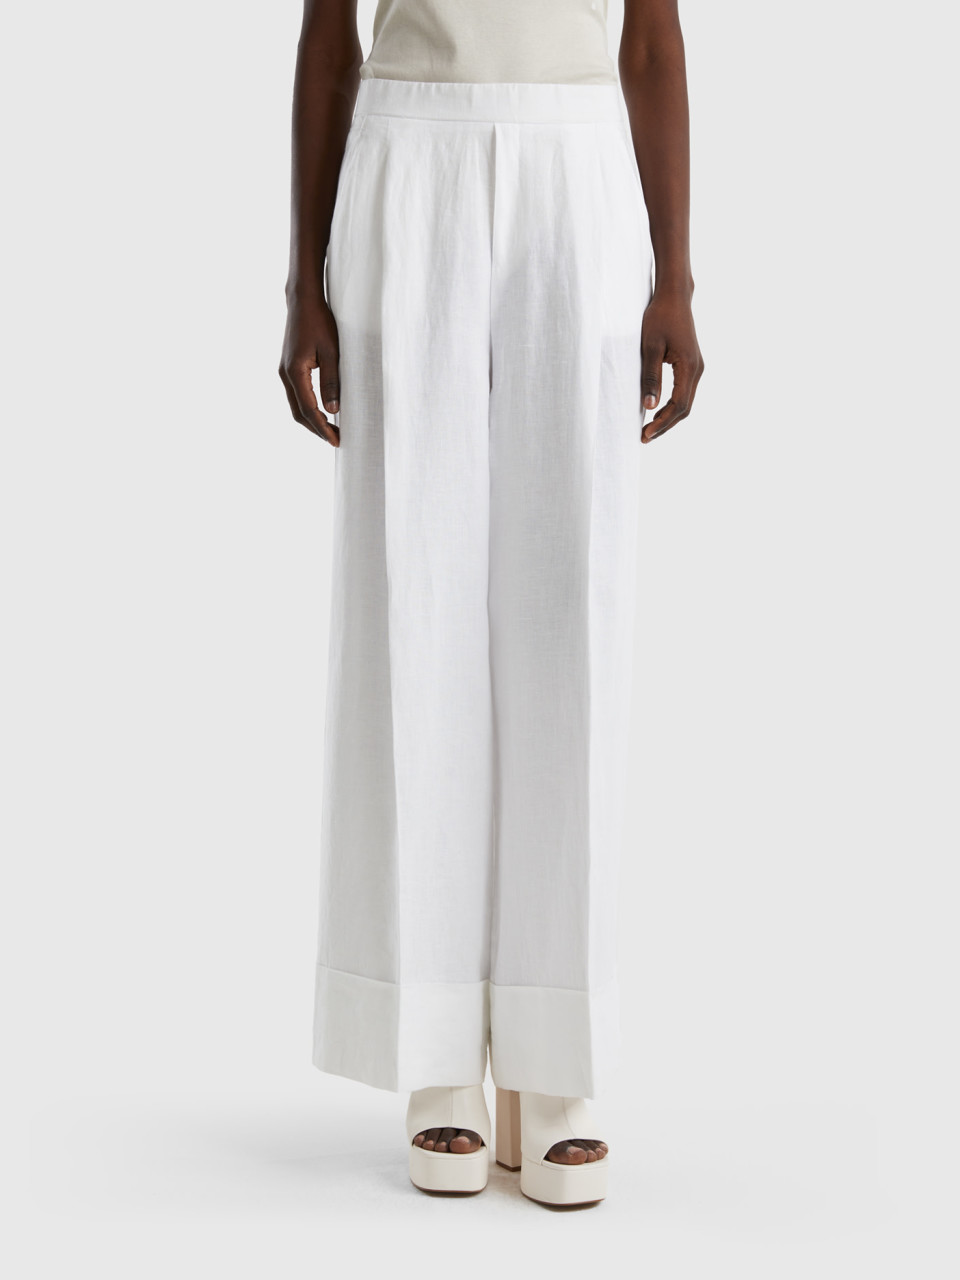 Benetton, Palazzo Trousers In 100% Linen, White, Women